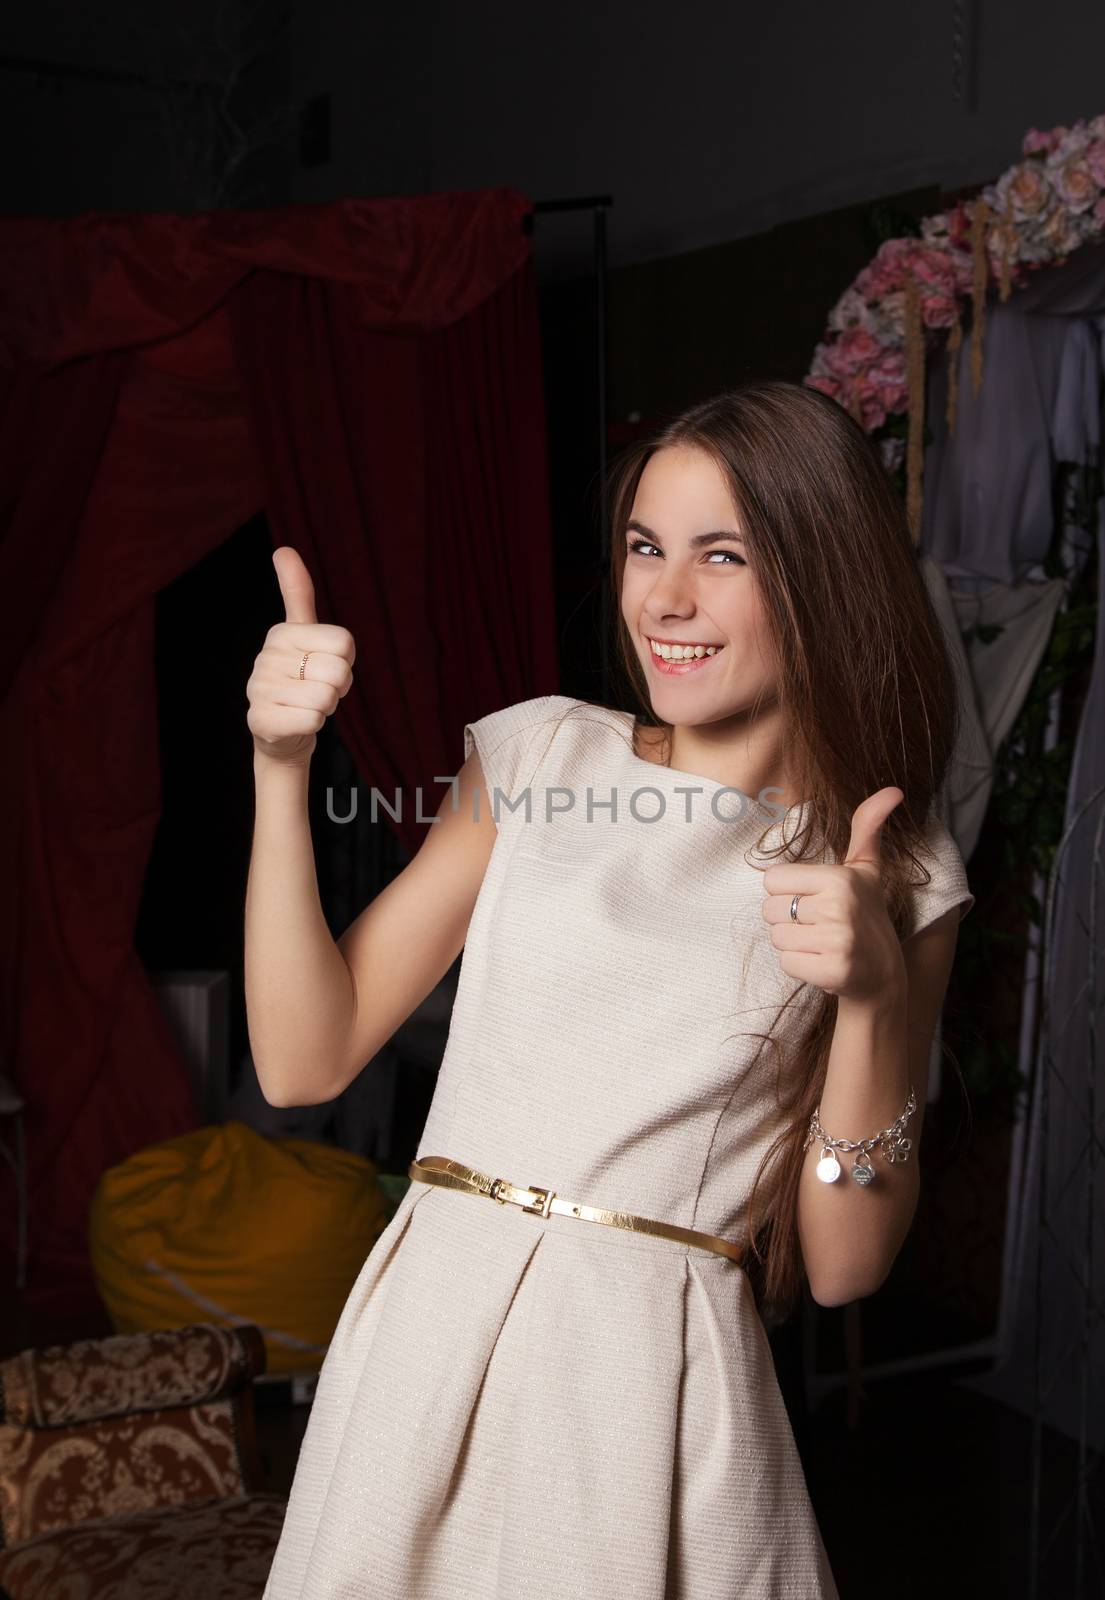 joyful girl in light dress shows gesture all right